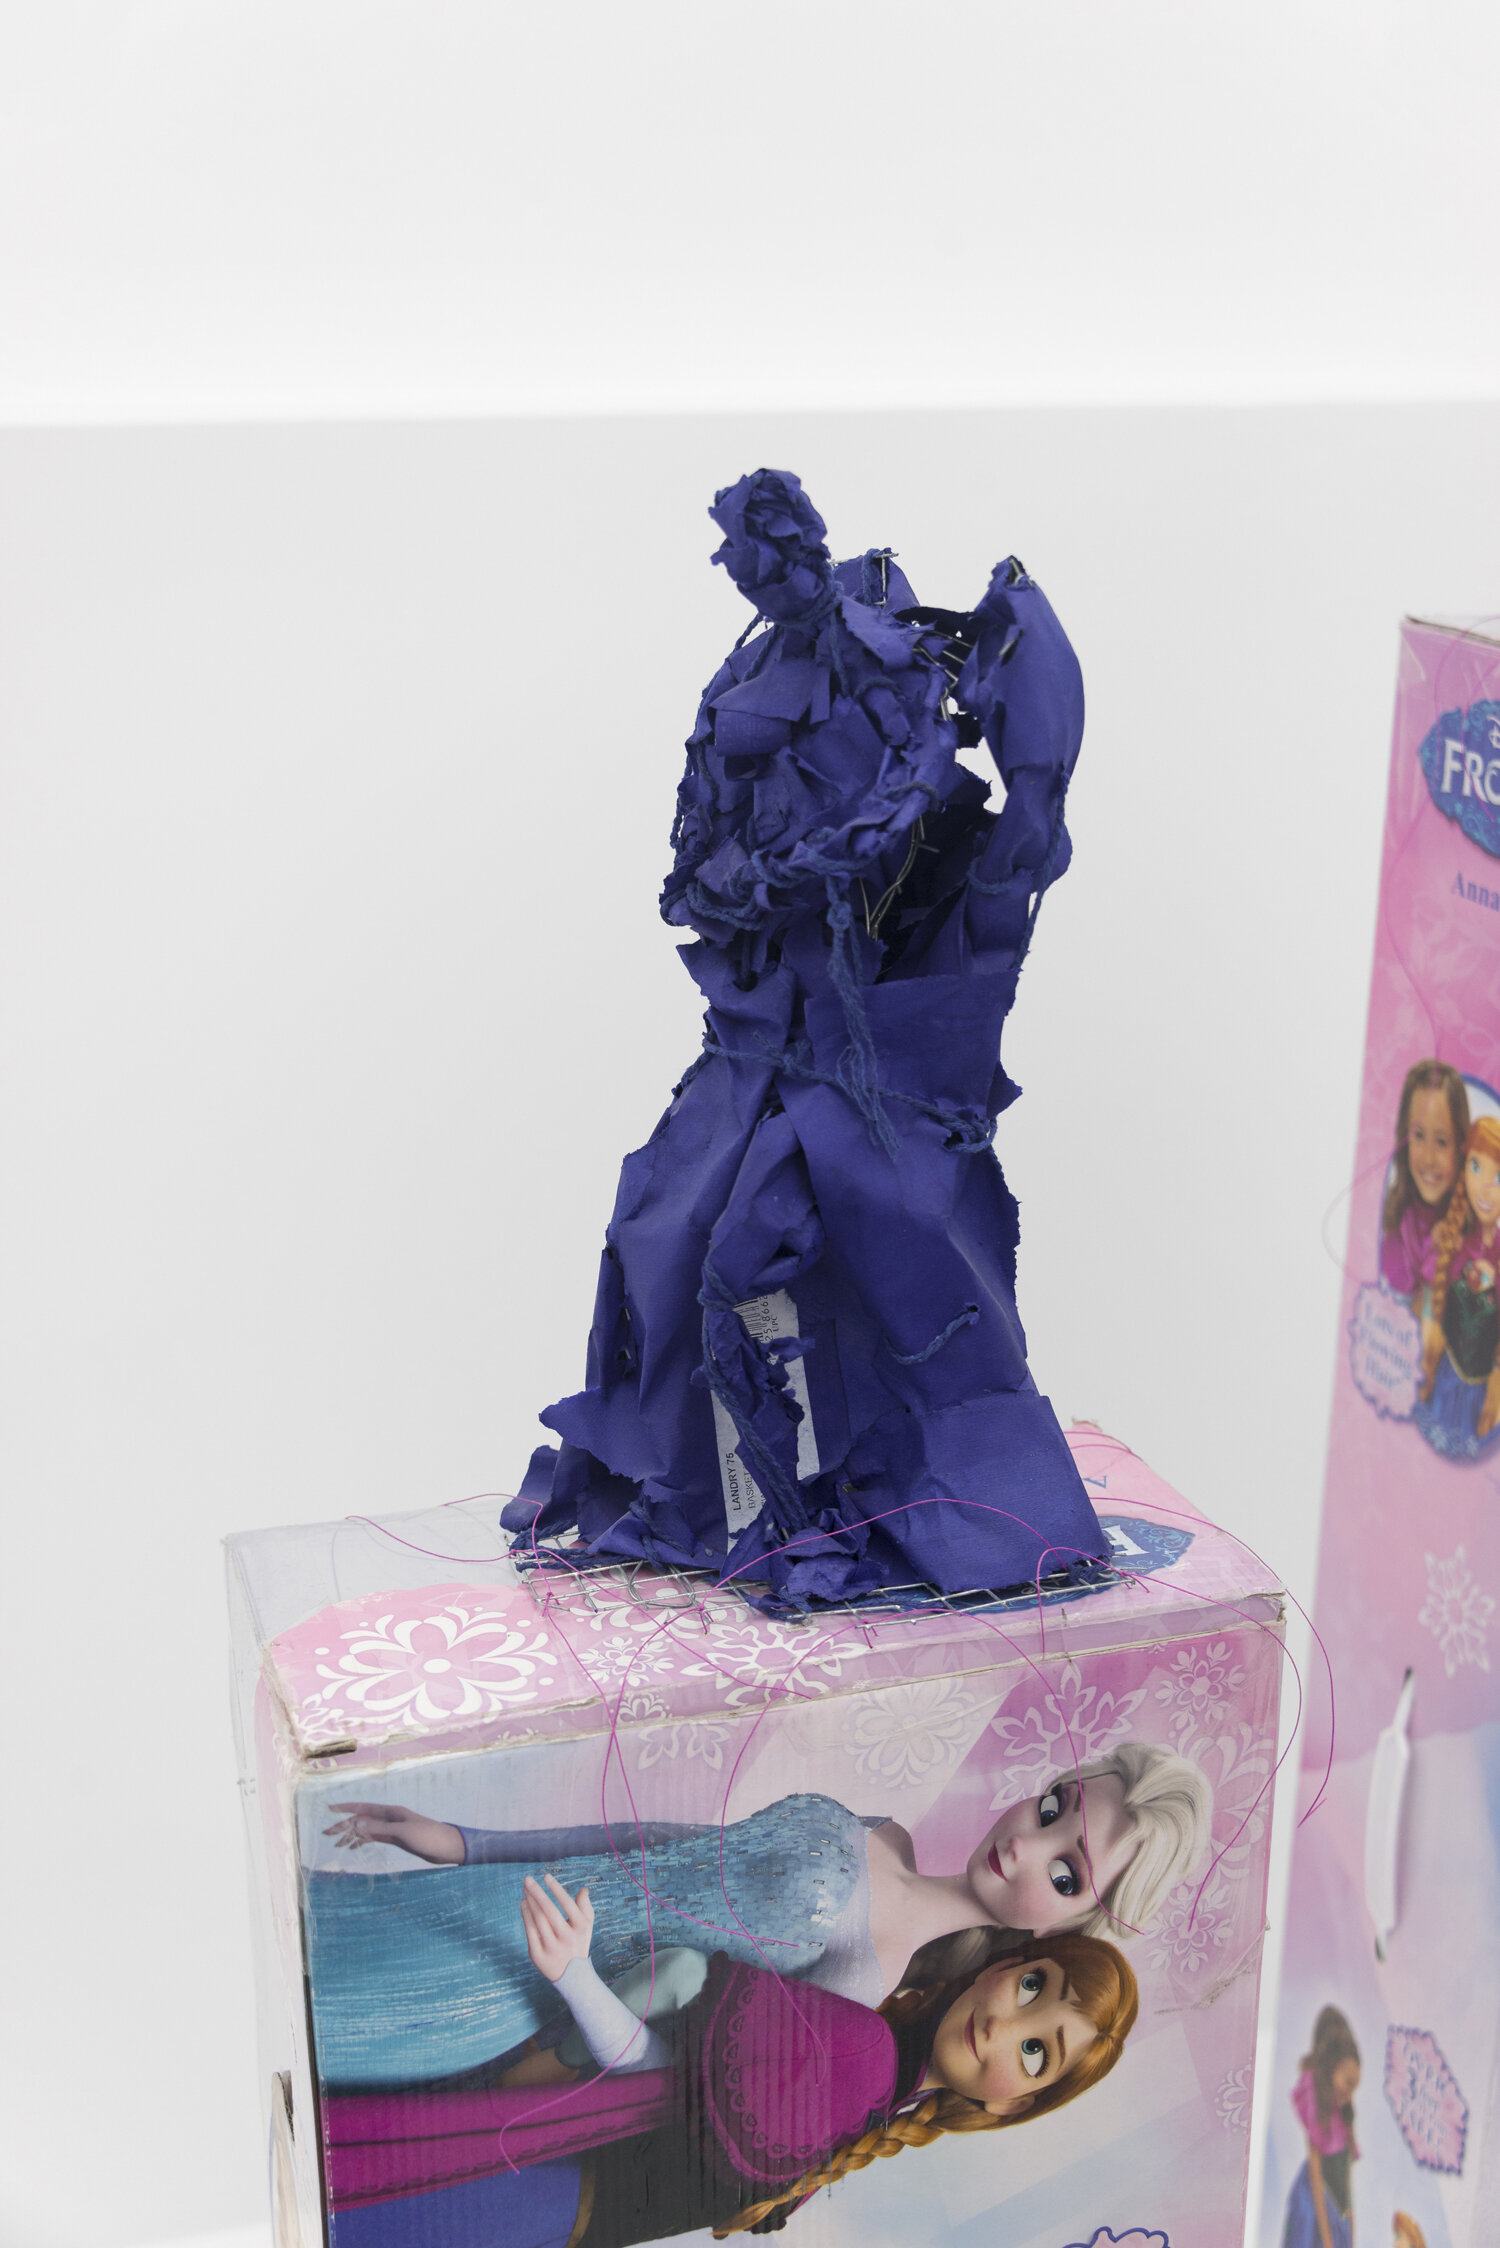   Angel 1a , 2019, Steel, paper, cotton twine. Pedestal: cardboard, plastic, waxed cotton thread 51 x 11 x 6 in (figure only 12.5 x 6 x 7 in)  